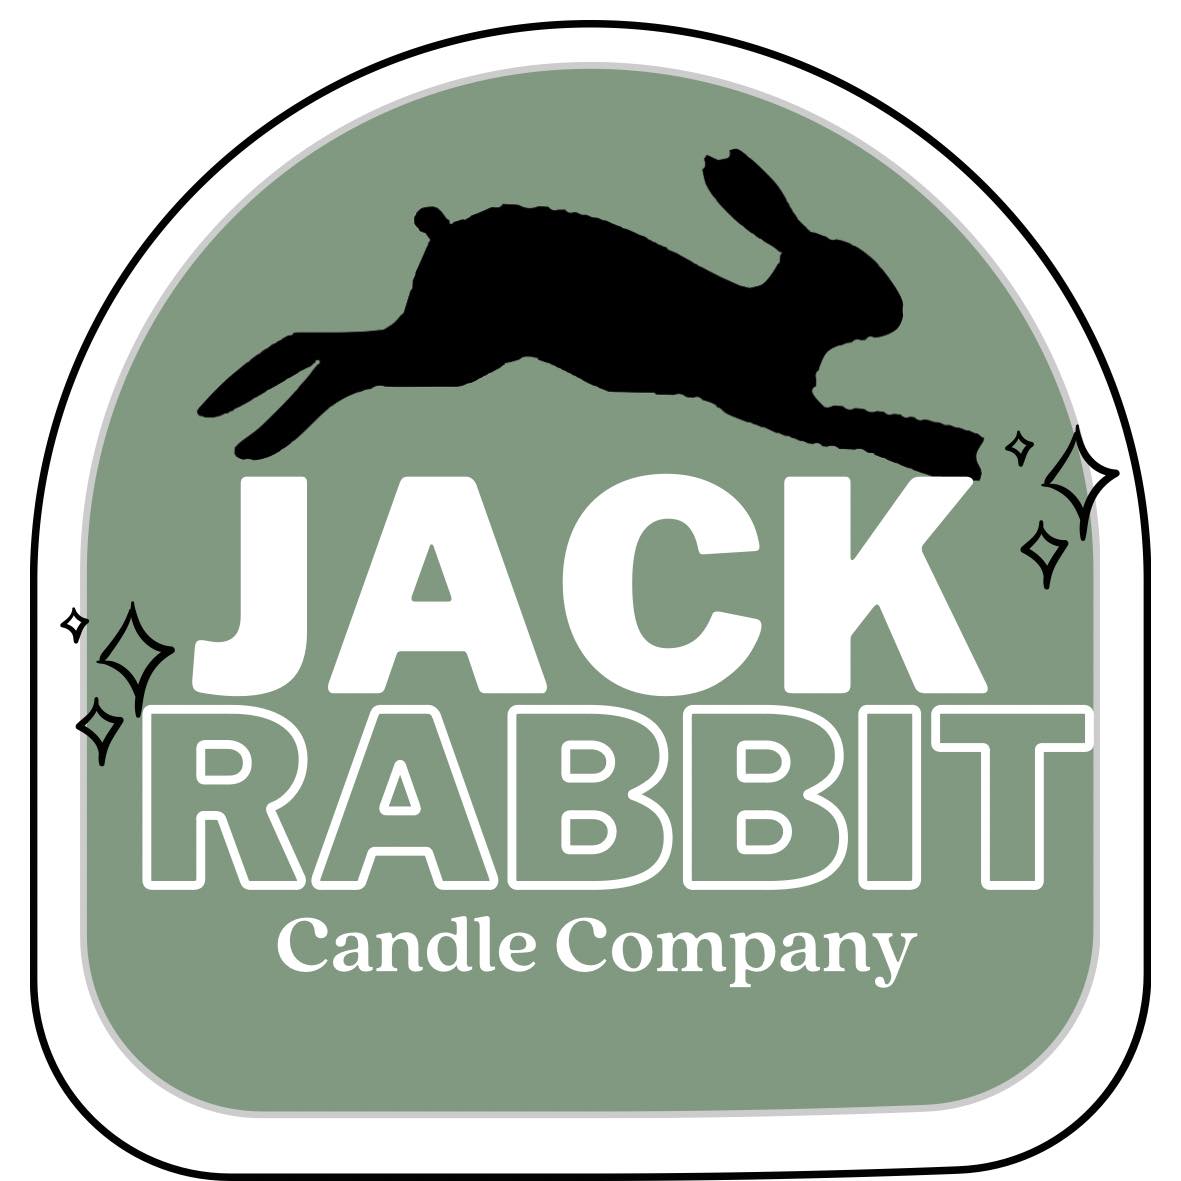 Jack Rabbit Candle Company